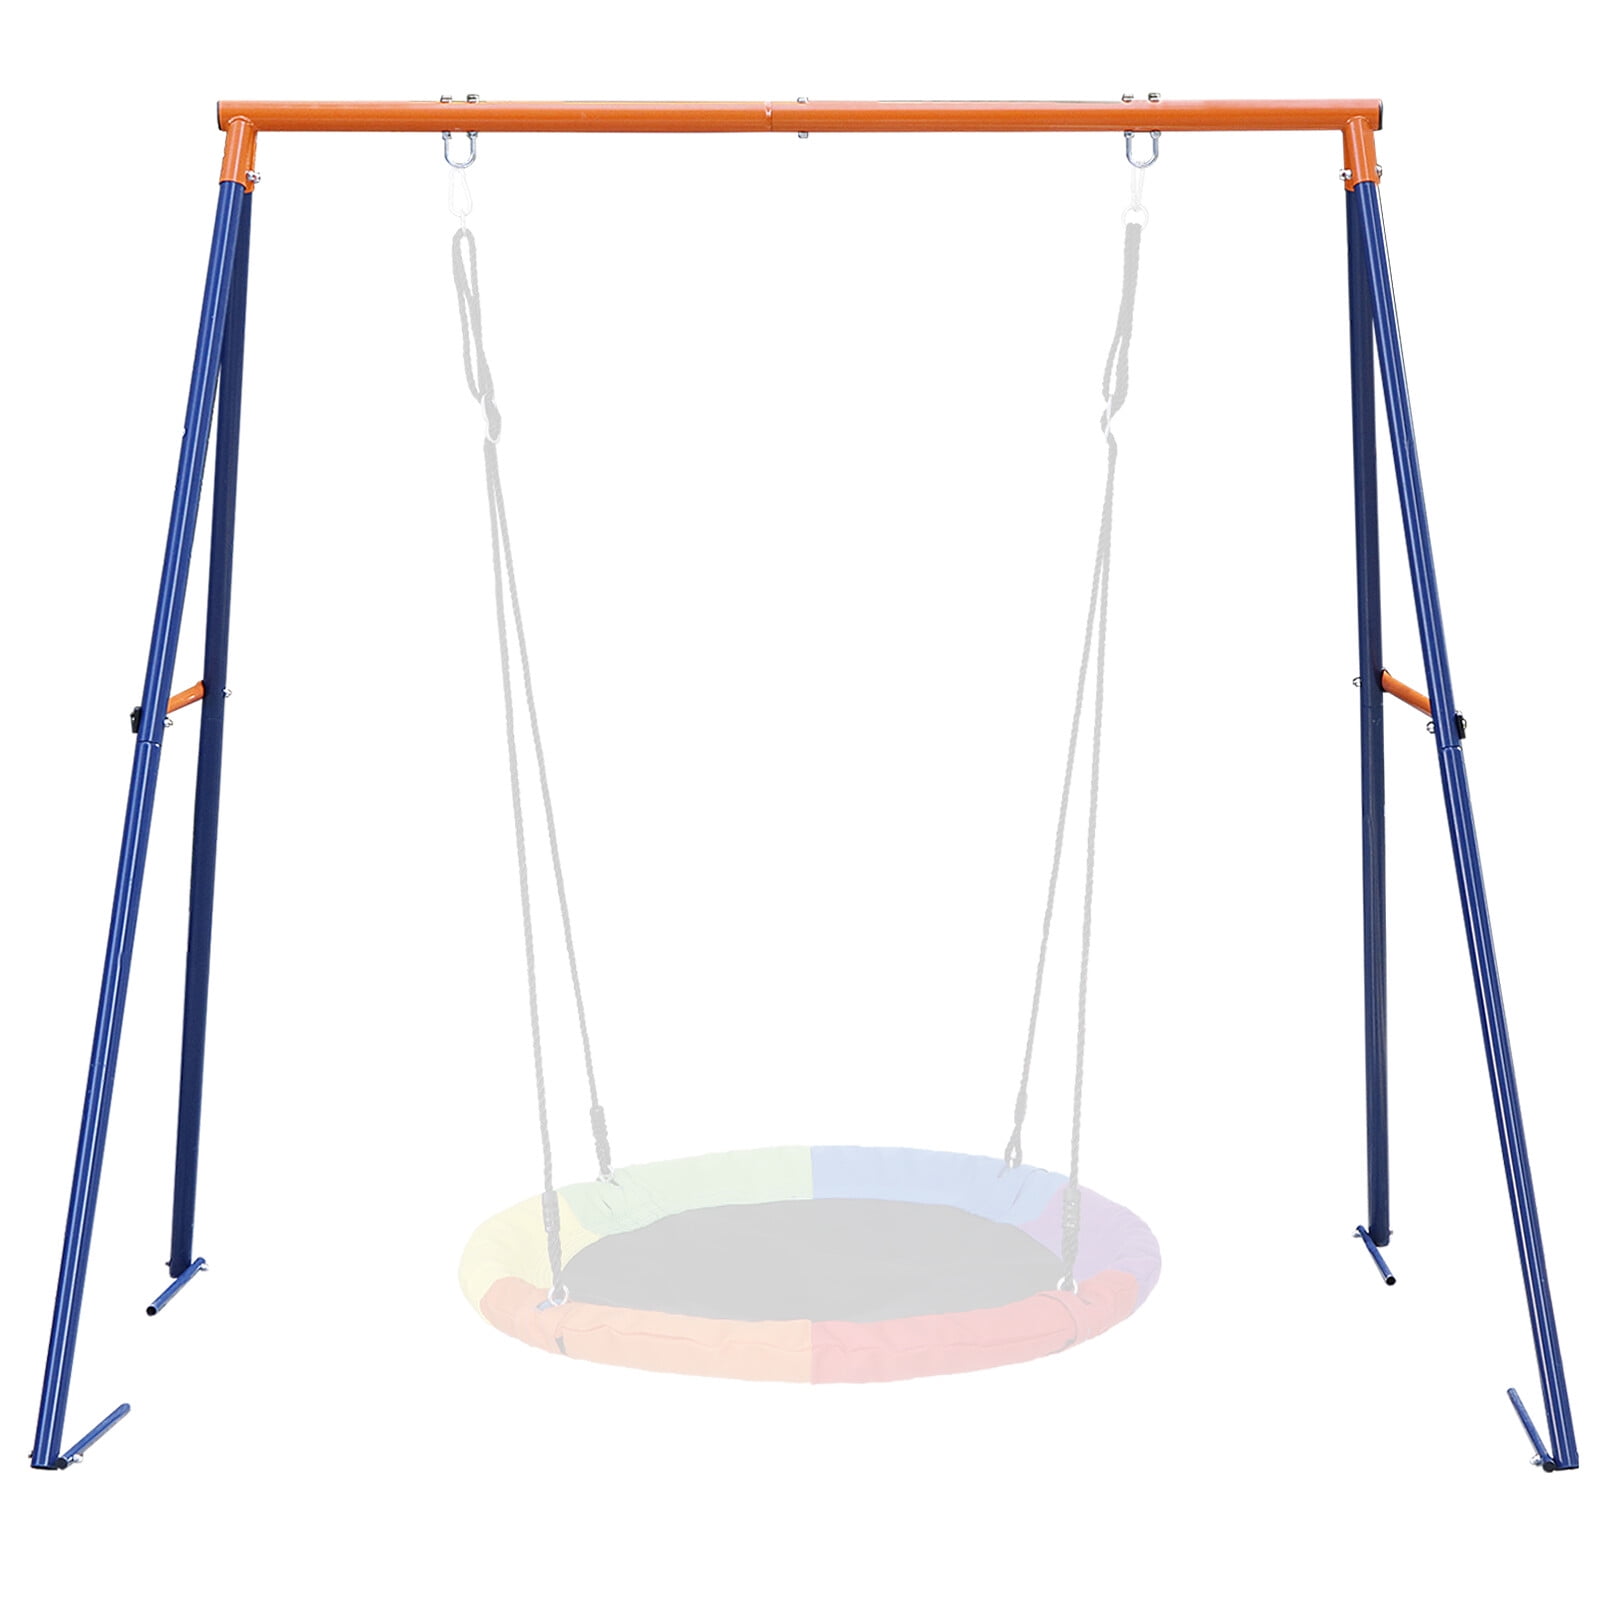 EOSAGA Kids Outdoor A Frame Swing Set Large Heavy Duty Metal Swing Stand 74 Height 91.3 Length Frame 